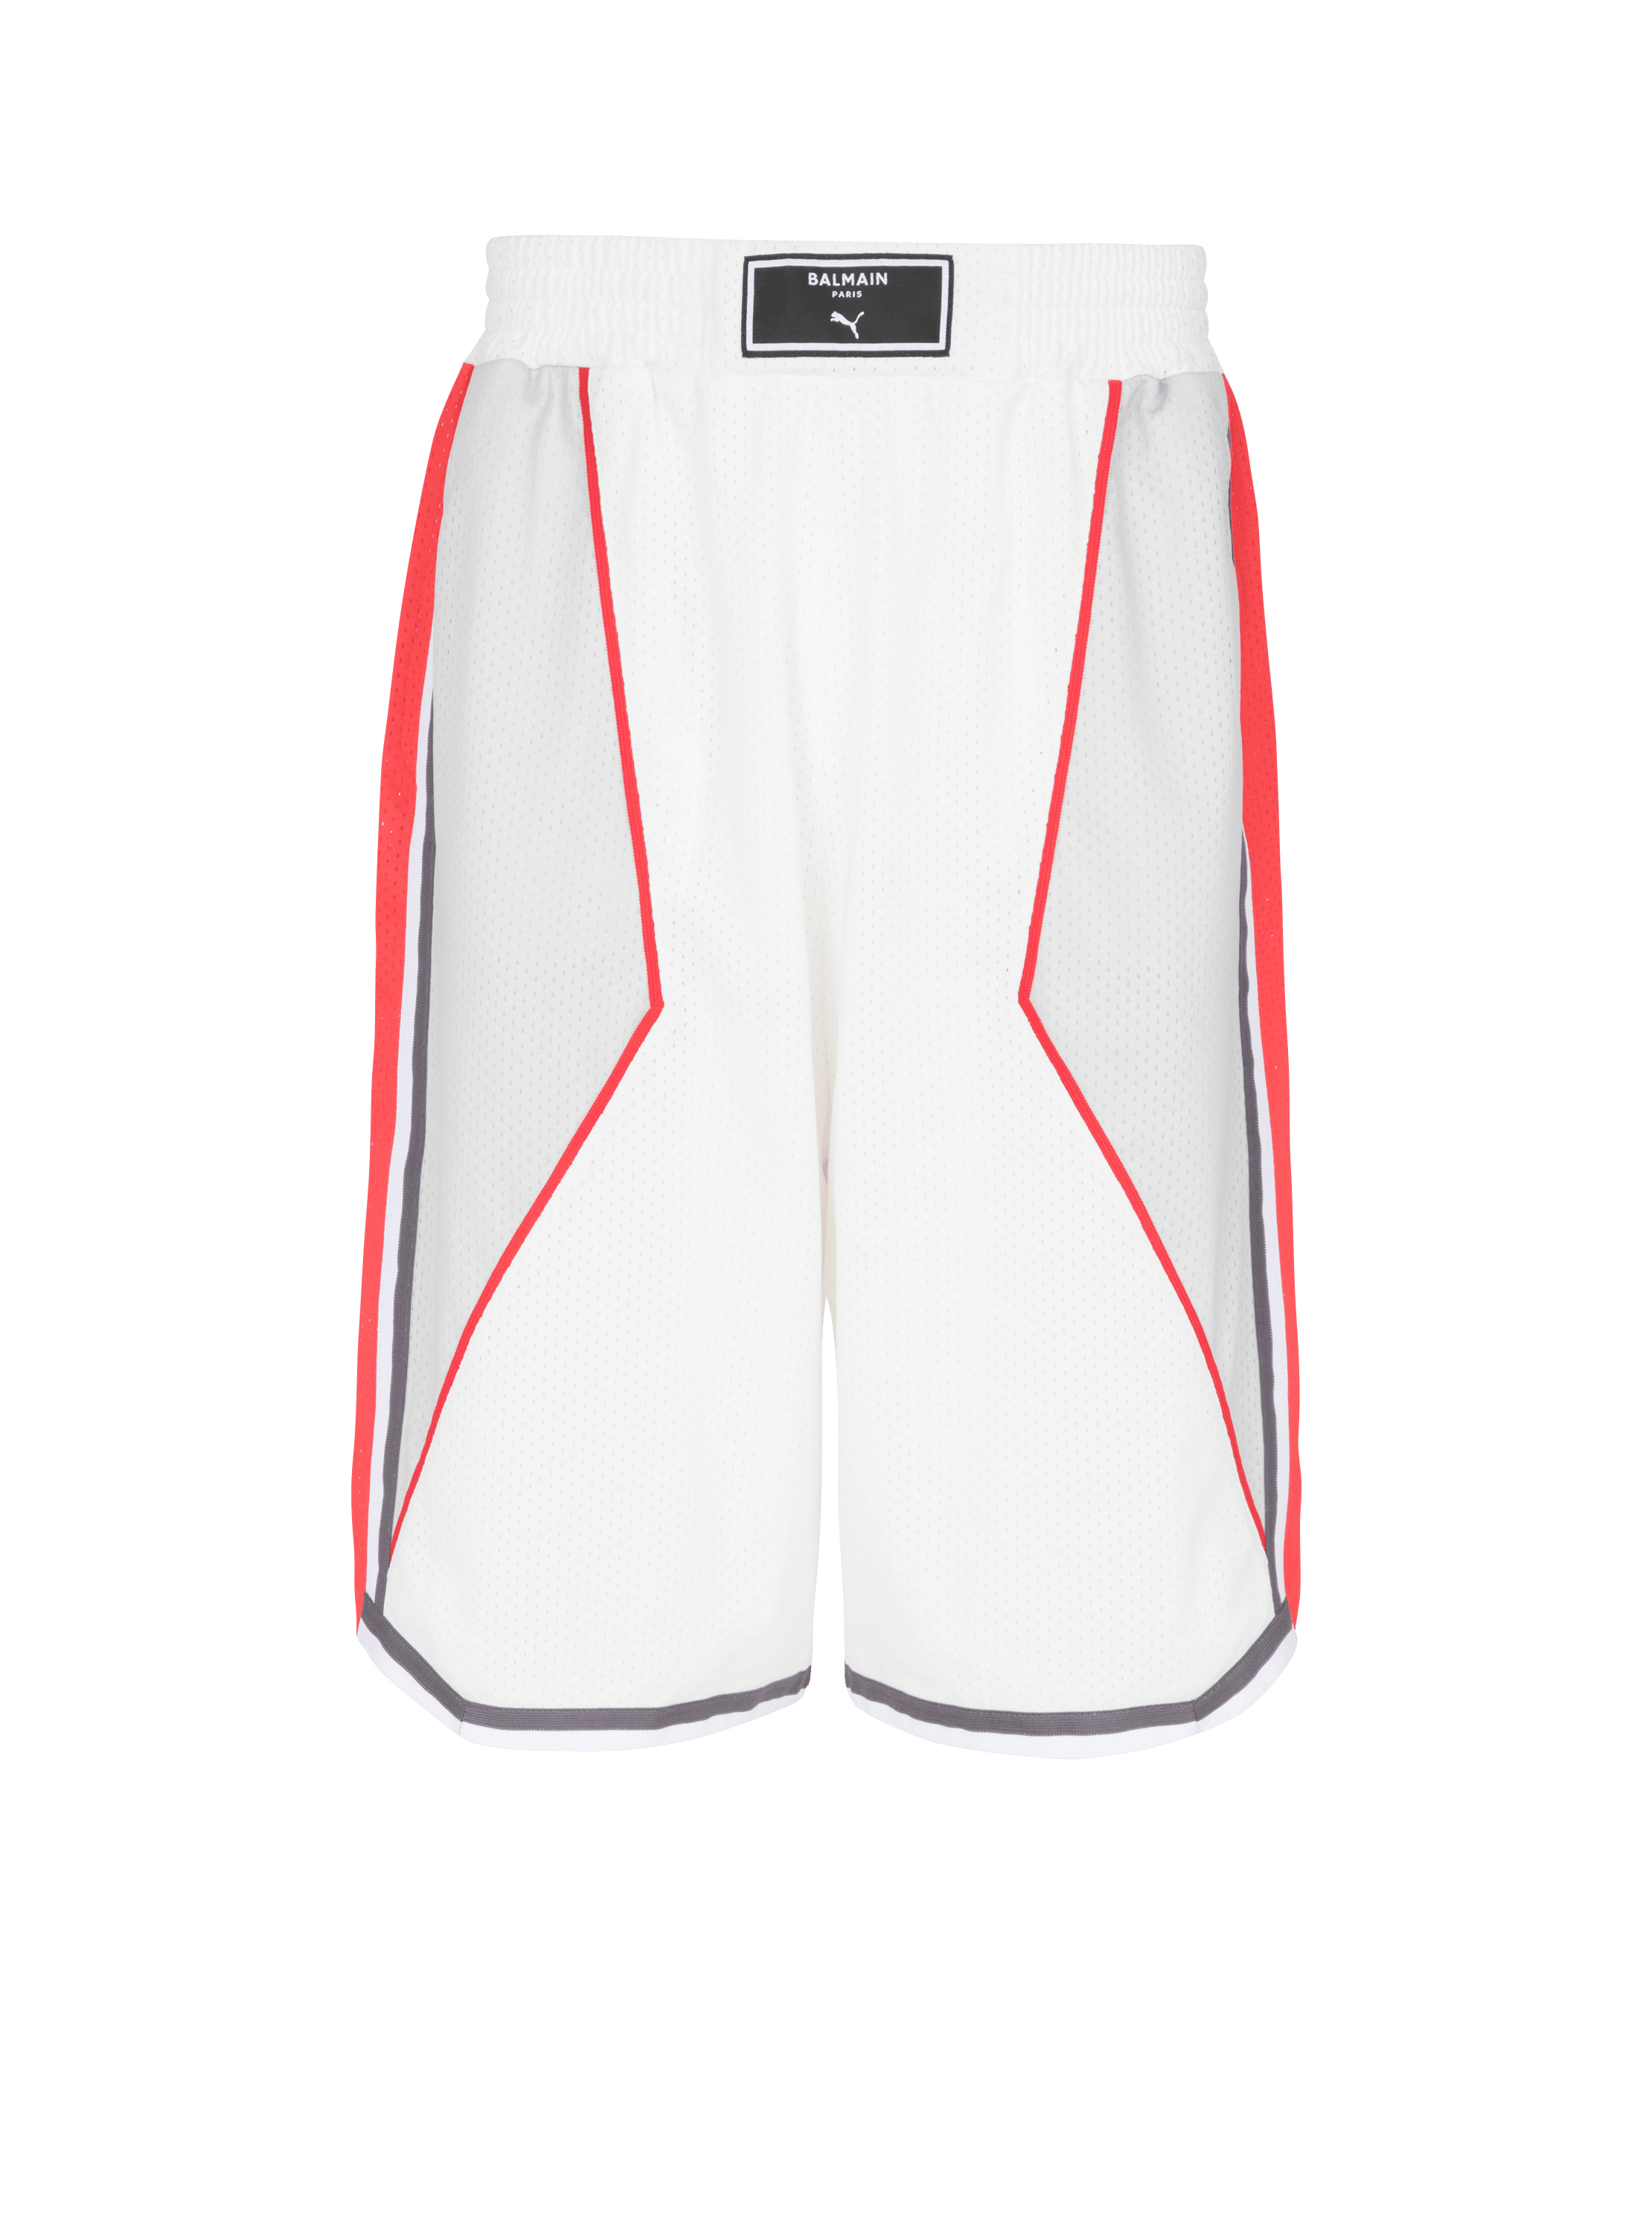 Balmain x Puma - Shorts de baloncesto, blanco, hi-res